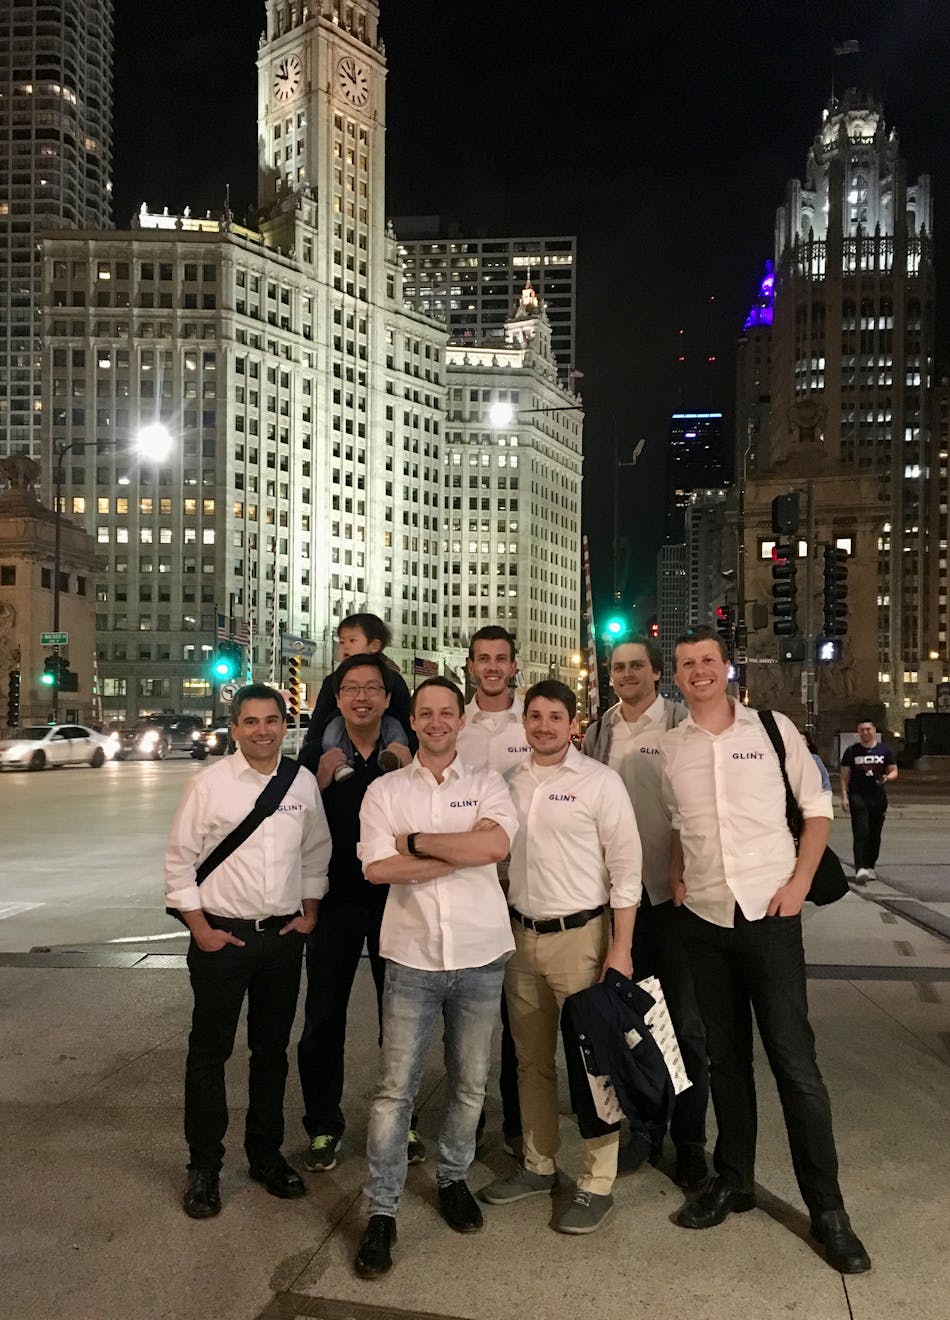 The Glint Lighting team gathers in Chicago during LightFair International 2018.